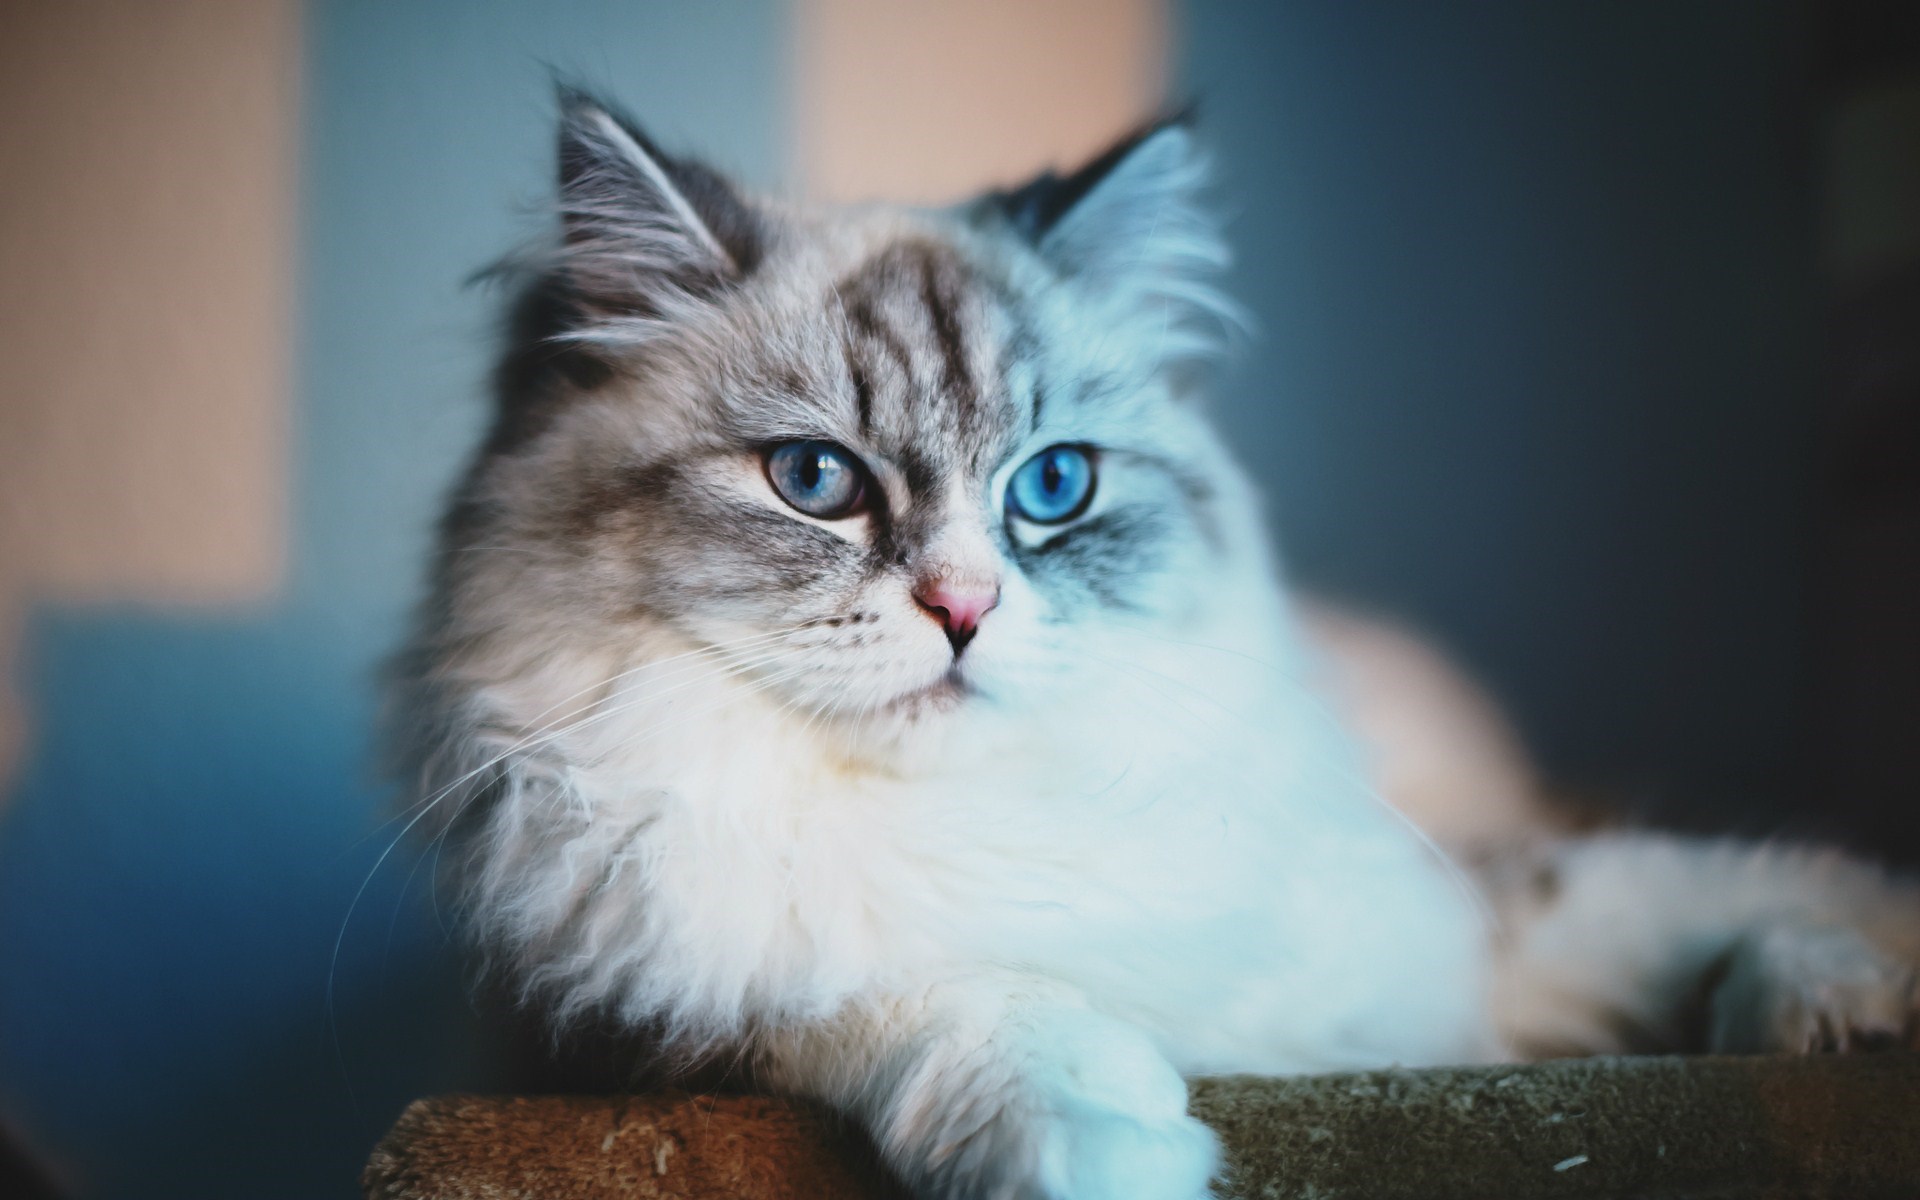 Blue Eyes Cat - Wallpaper, High Definition, High Quality, Widescreen